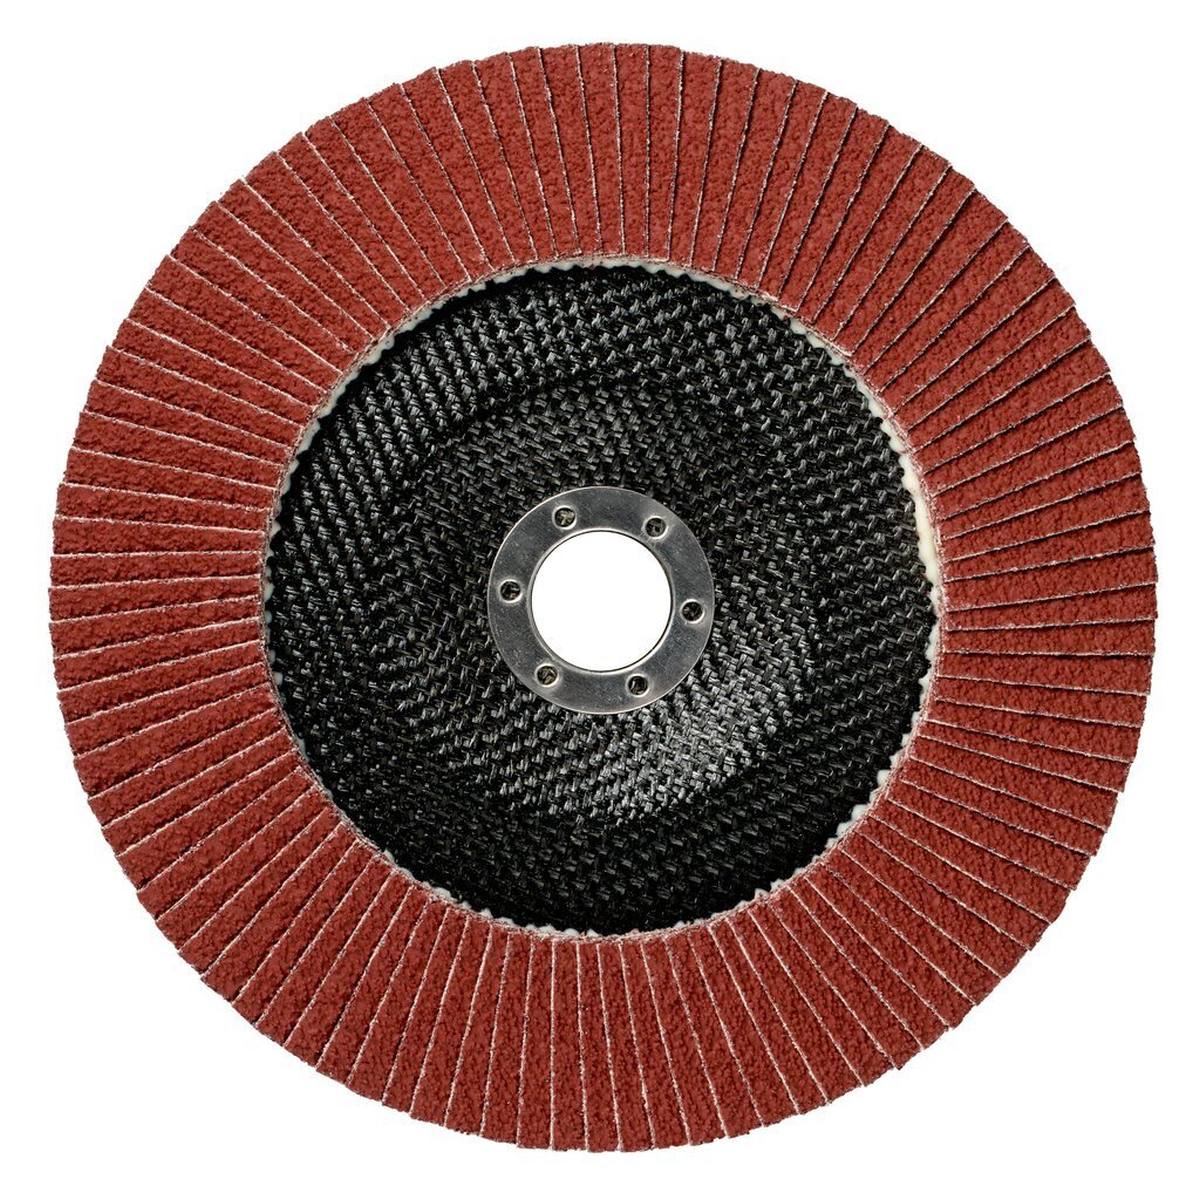 3M Cubitron II flap disc 967A, 180 mm, 22.23 mm, P40 #65060 conical